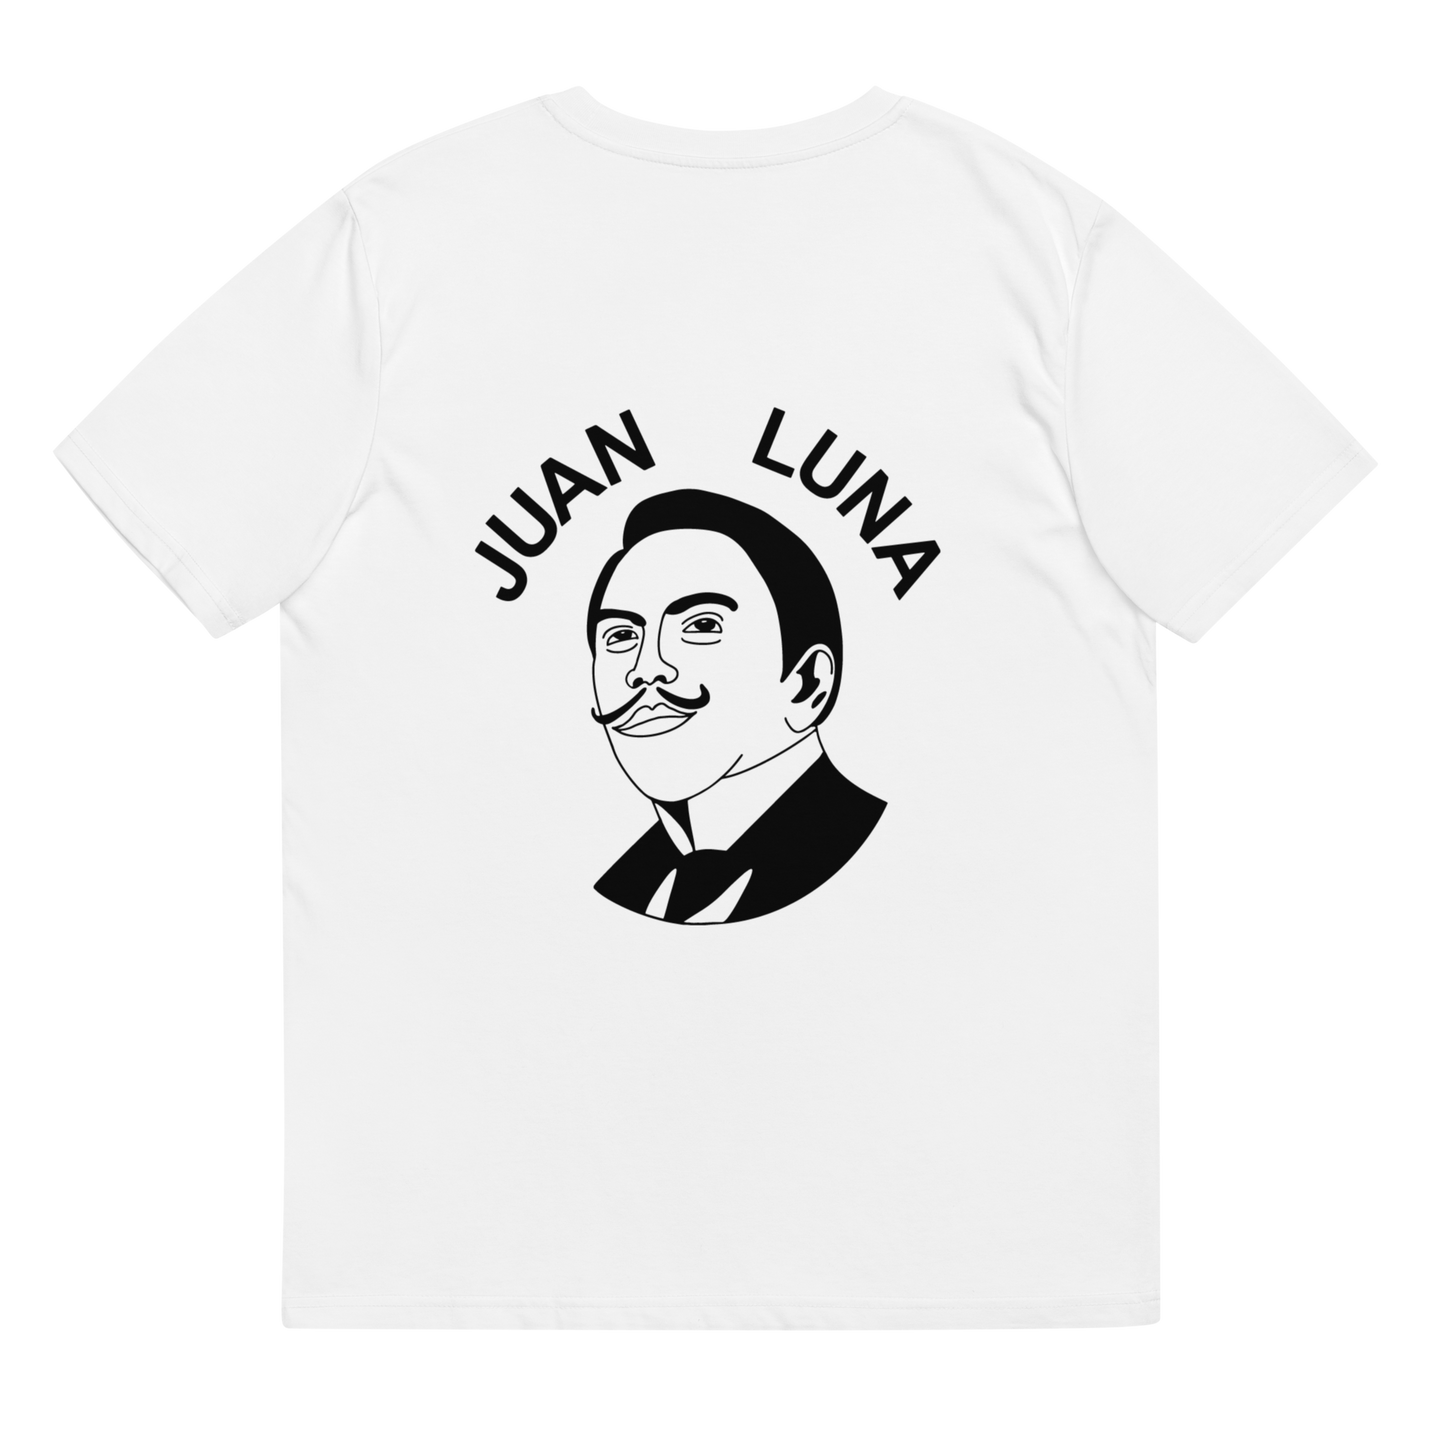 Juan Luna Embroidered T-Shirt I Organic Cotton